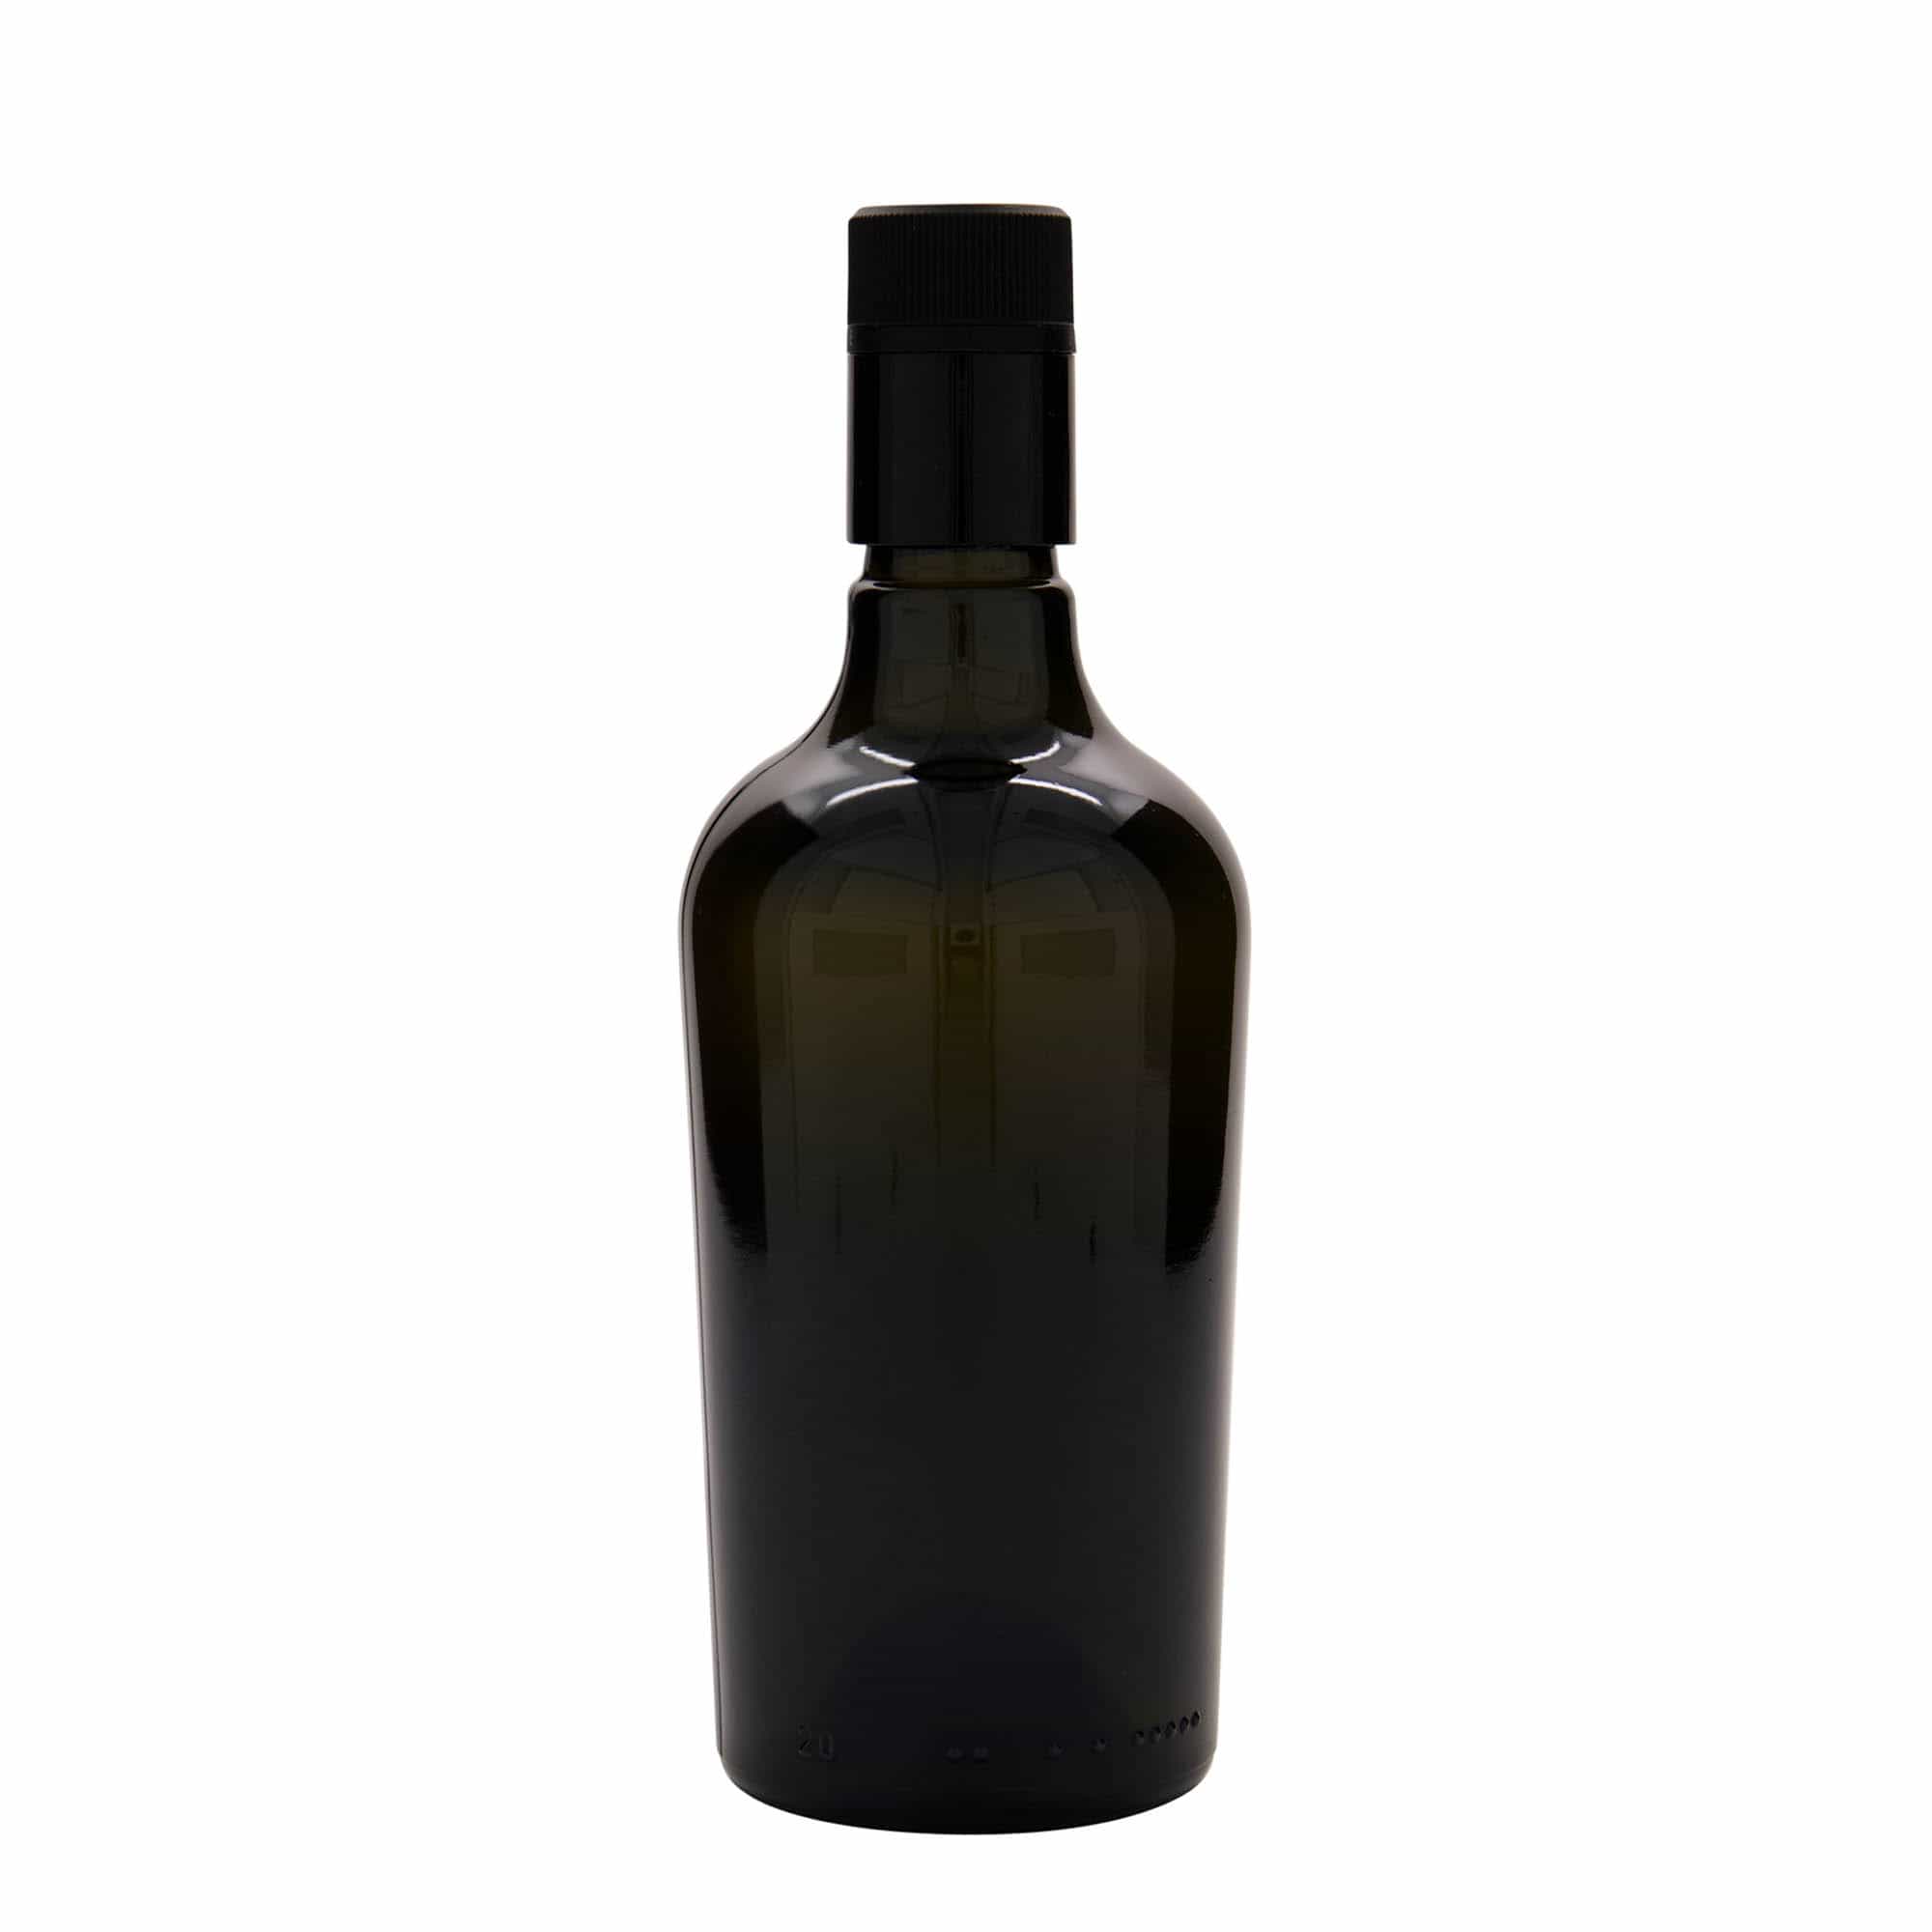 500 ml eddike-/olieflaske 'Oleum', glas, antikgrøn, åbning: DOP